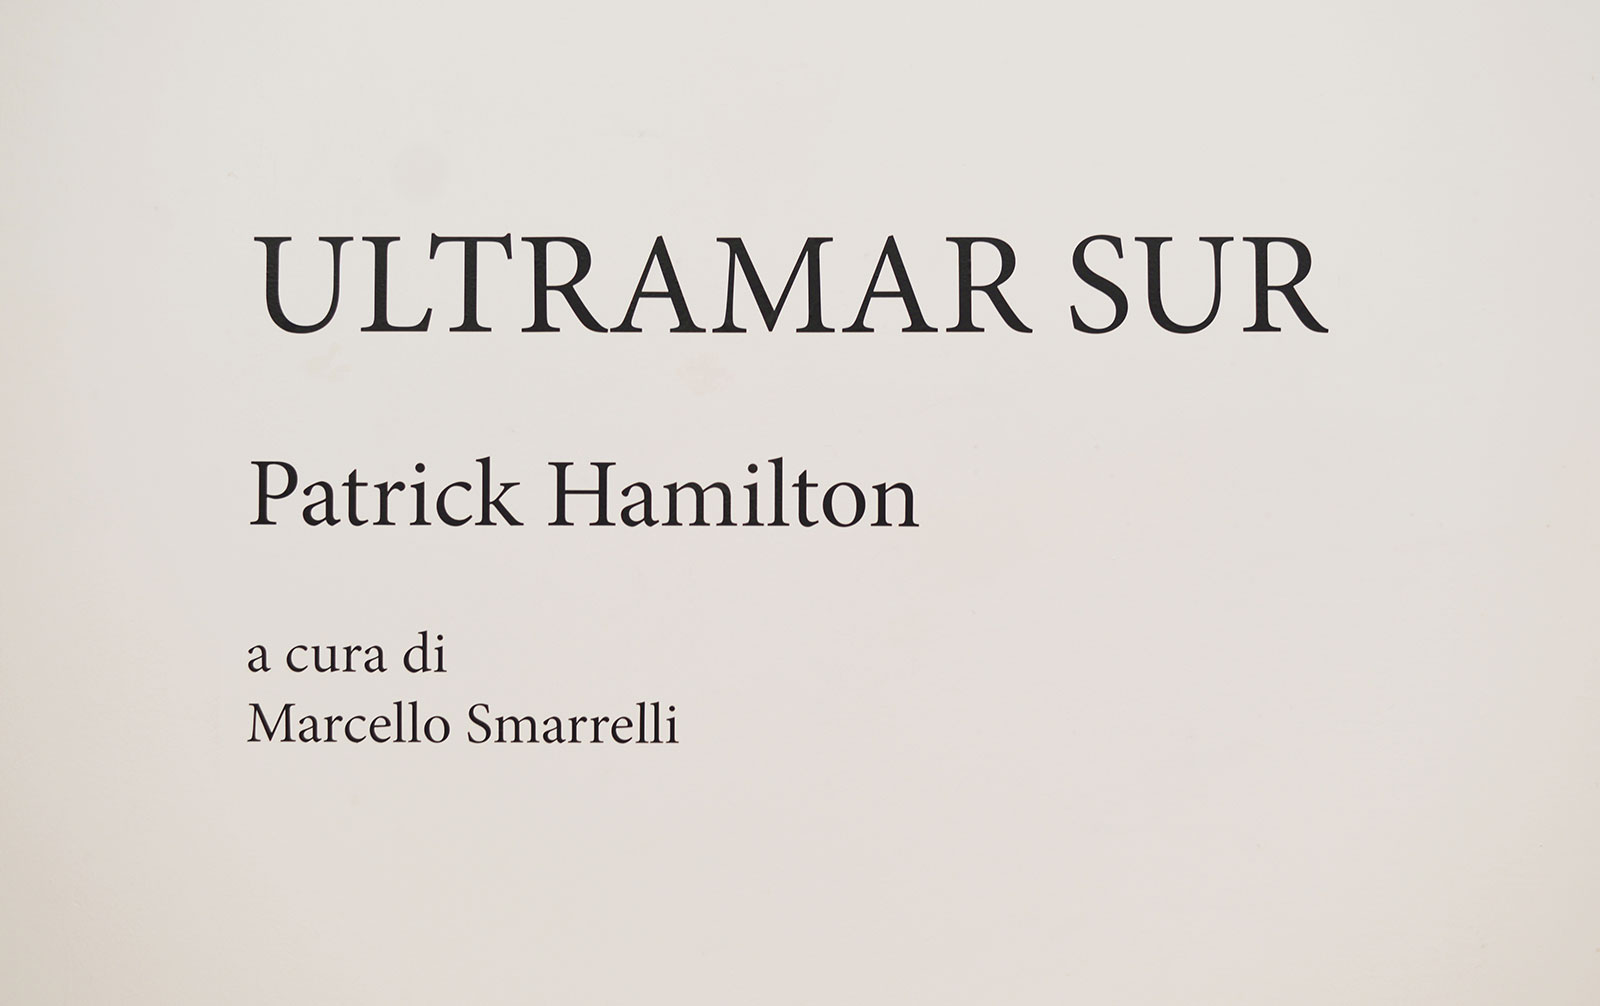 01_PatrickHamilton_UltramarSur_FPC